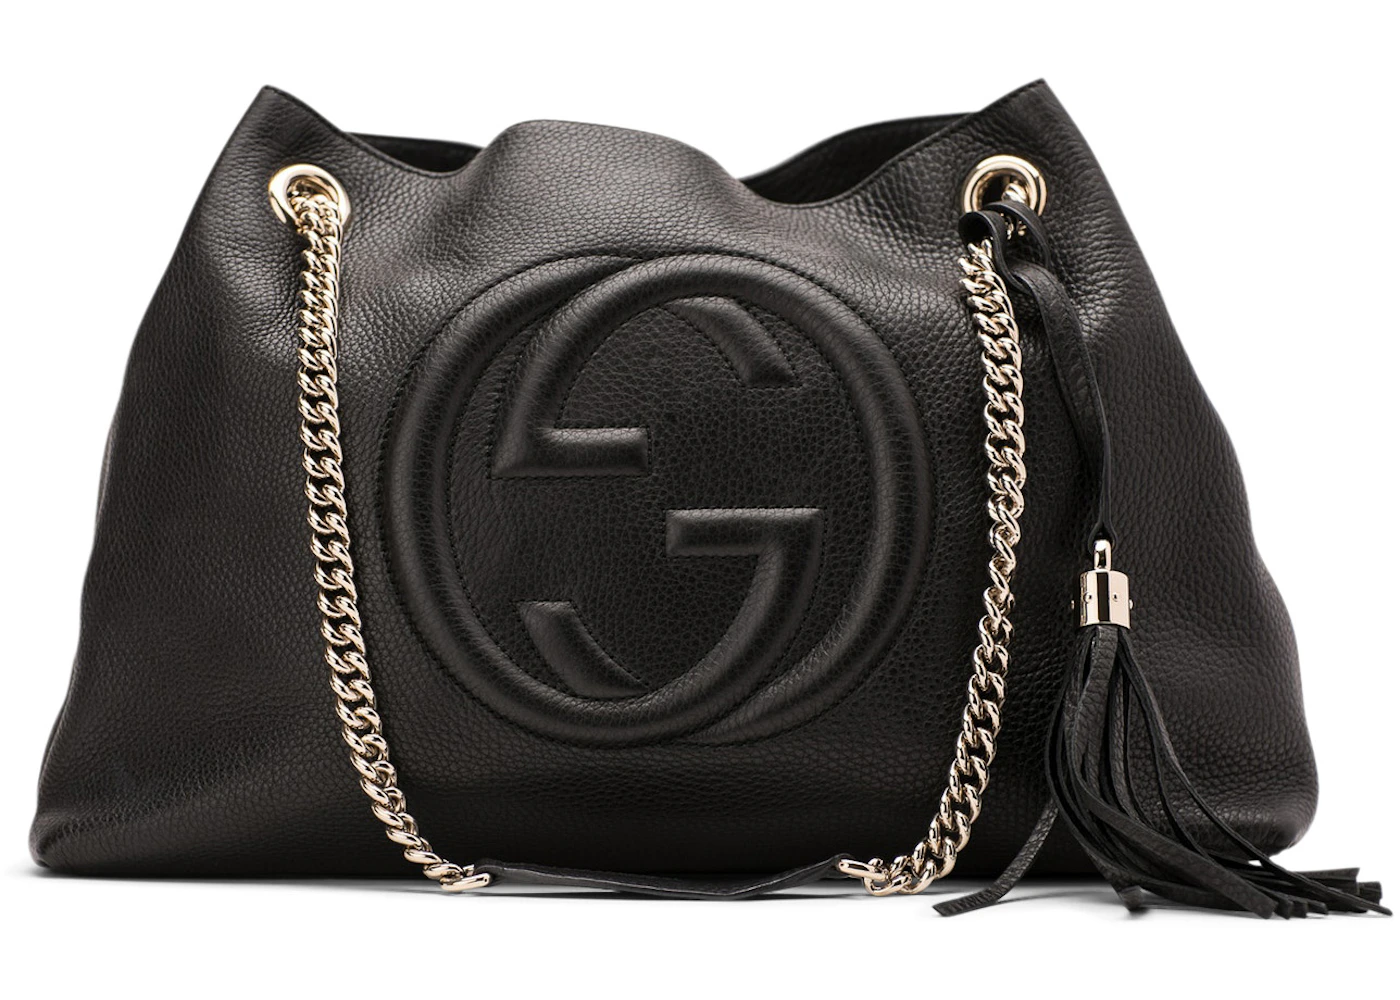 Gucci Soho Leather Chain Crossbody Bag Black, $980, Neiman Marcus